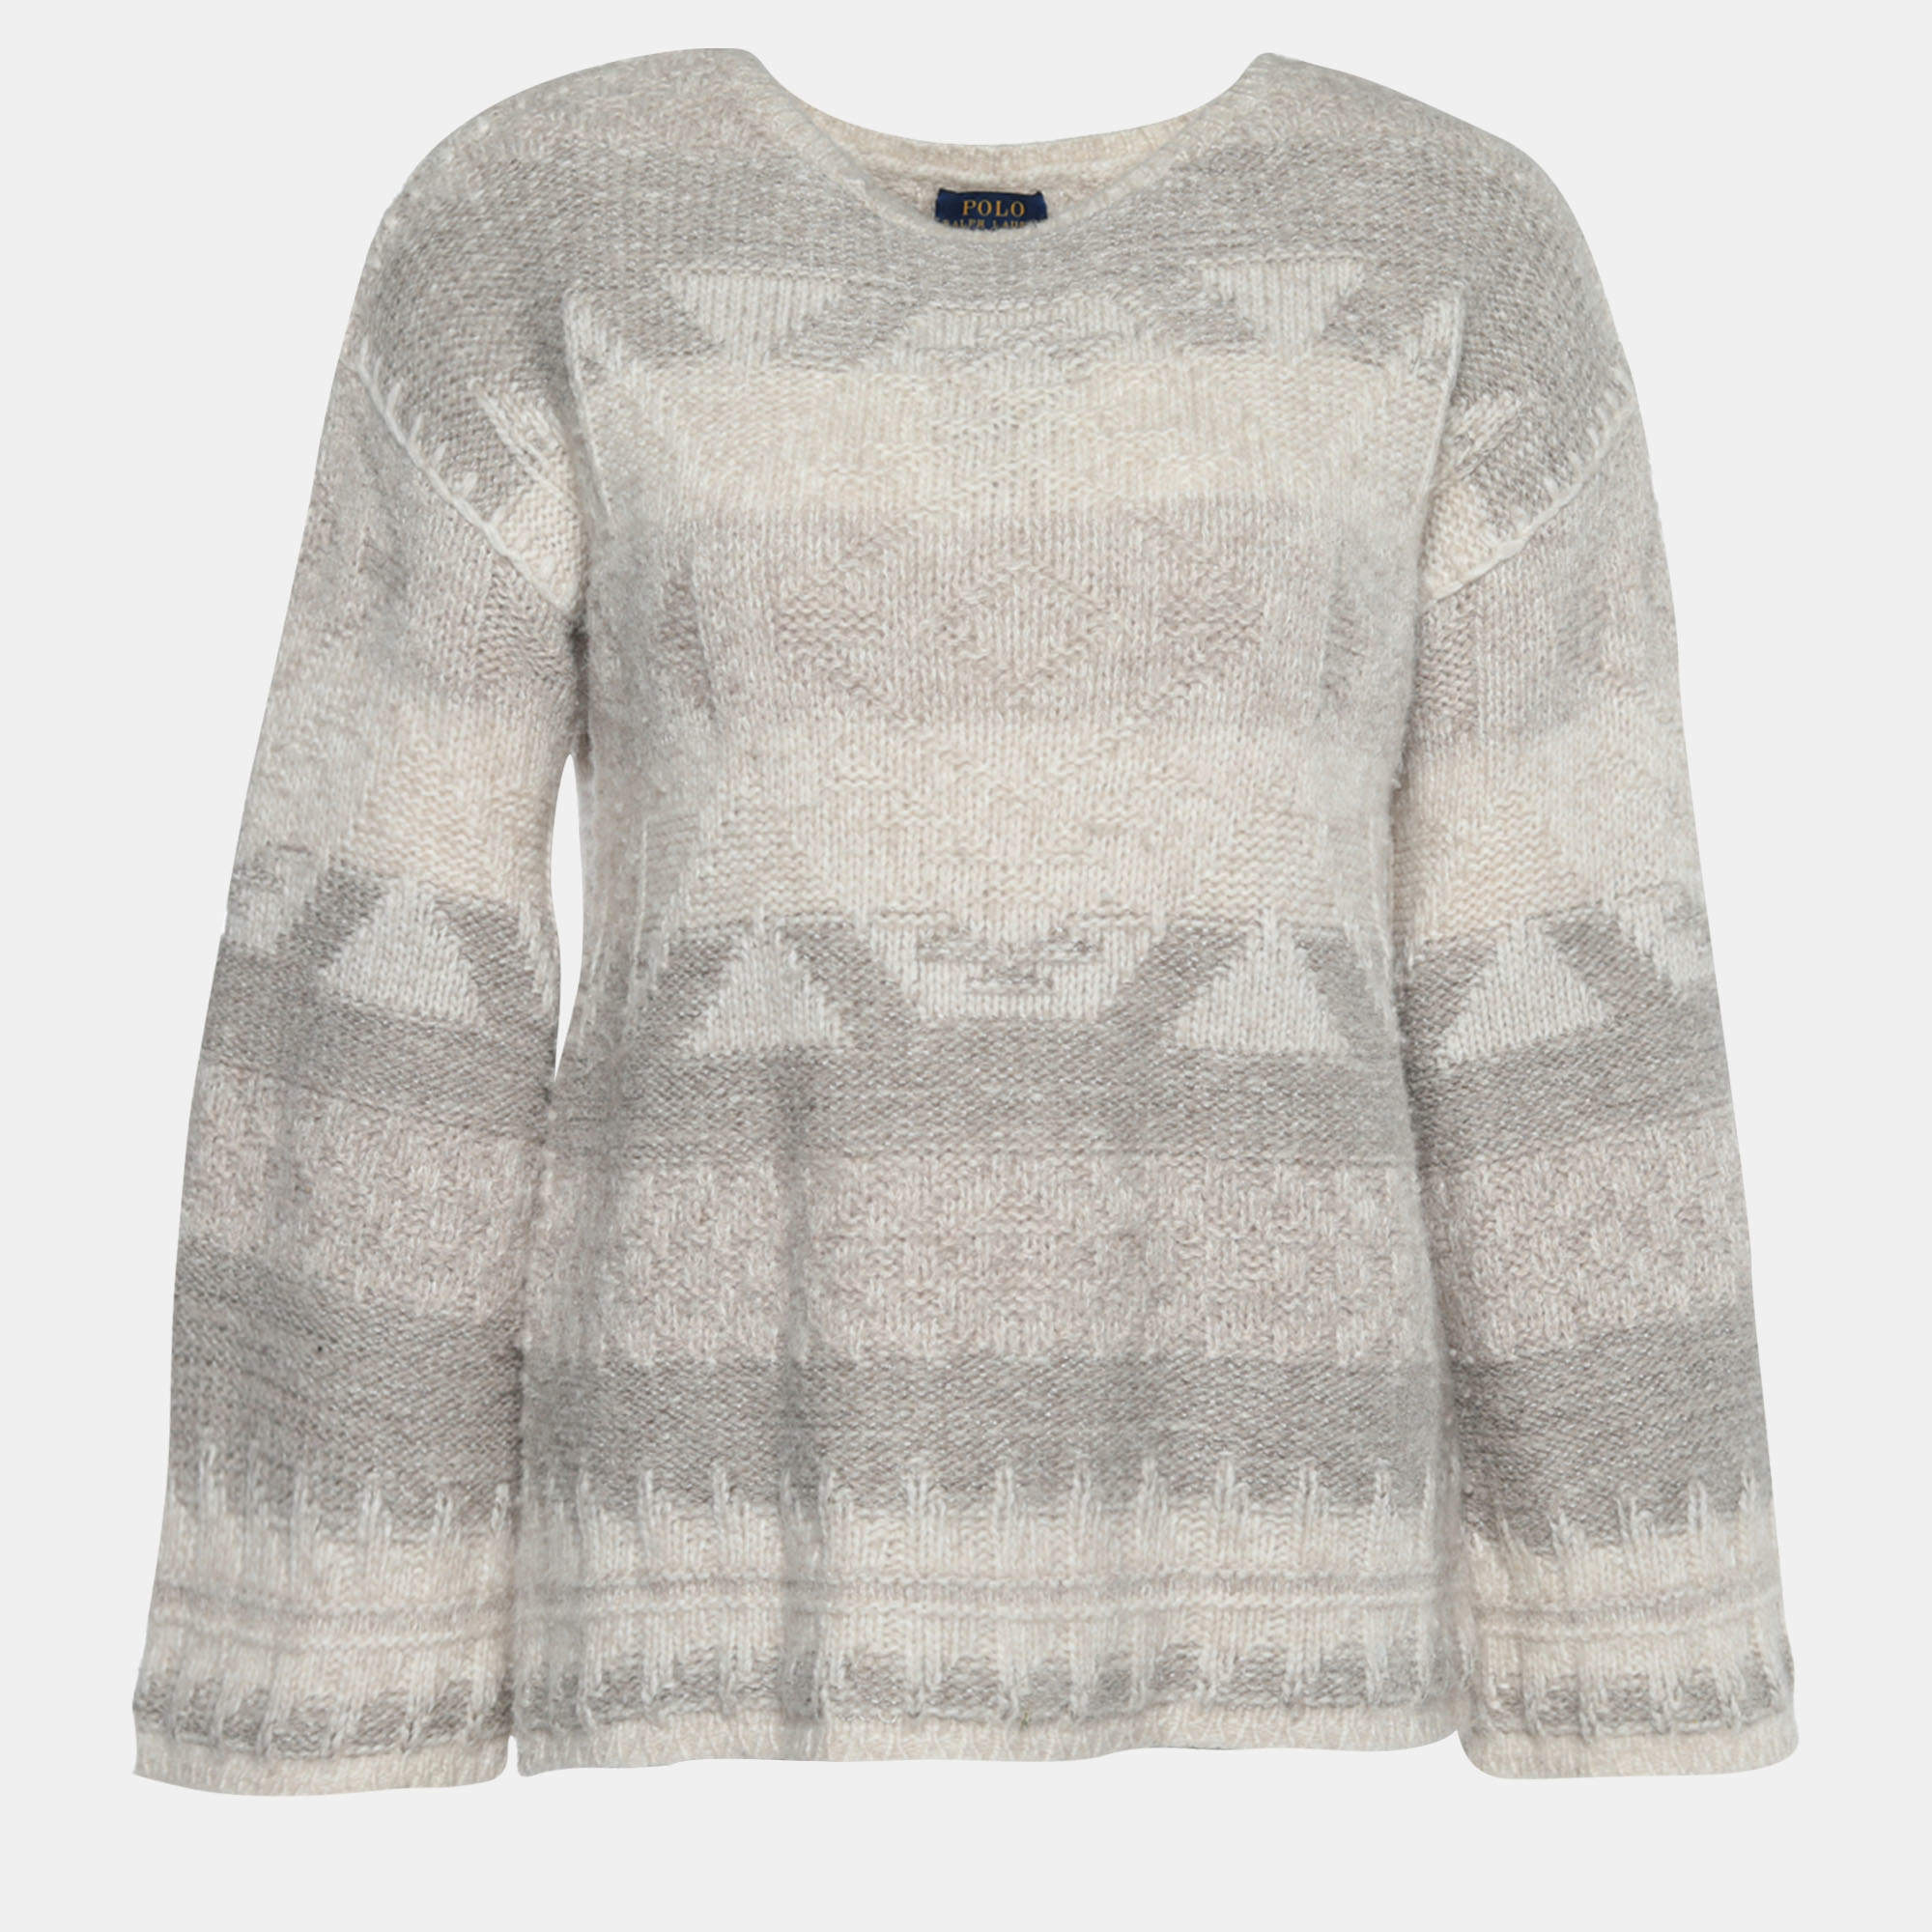 Polo Ralph Lauren Beige Lurex Knit Wool Blend Sweater XS